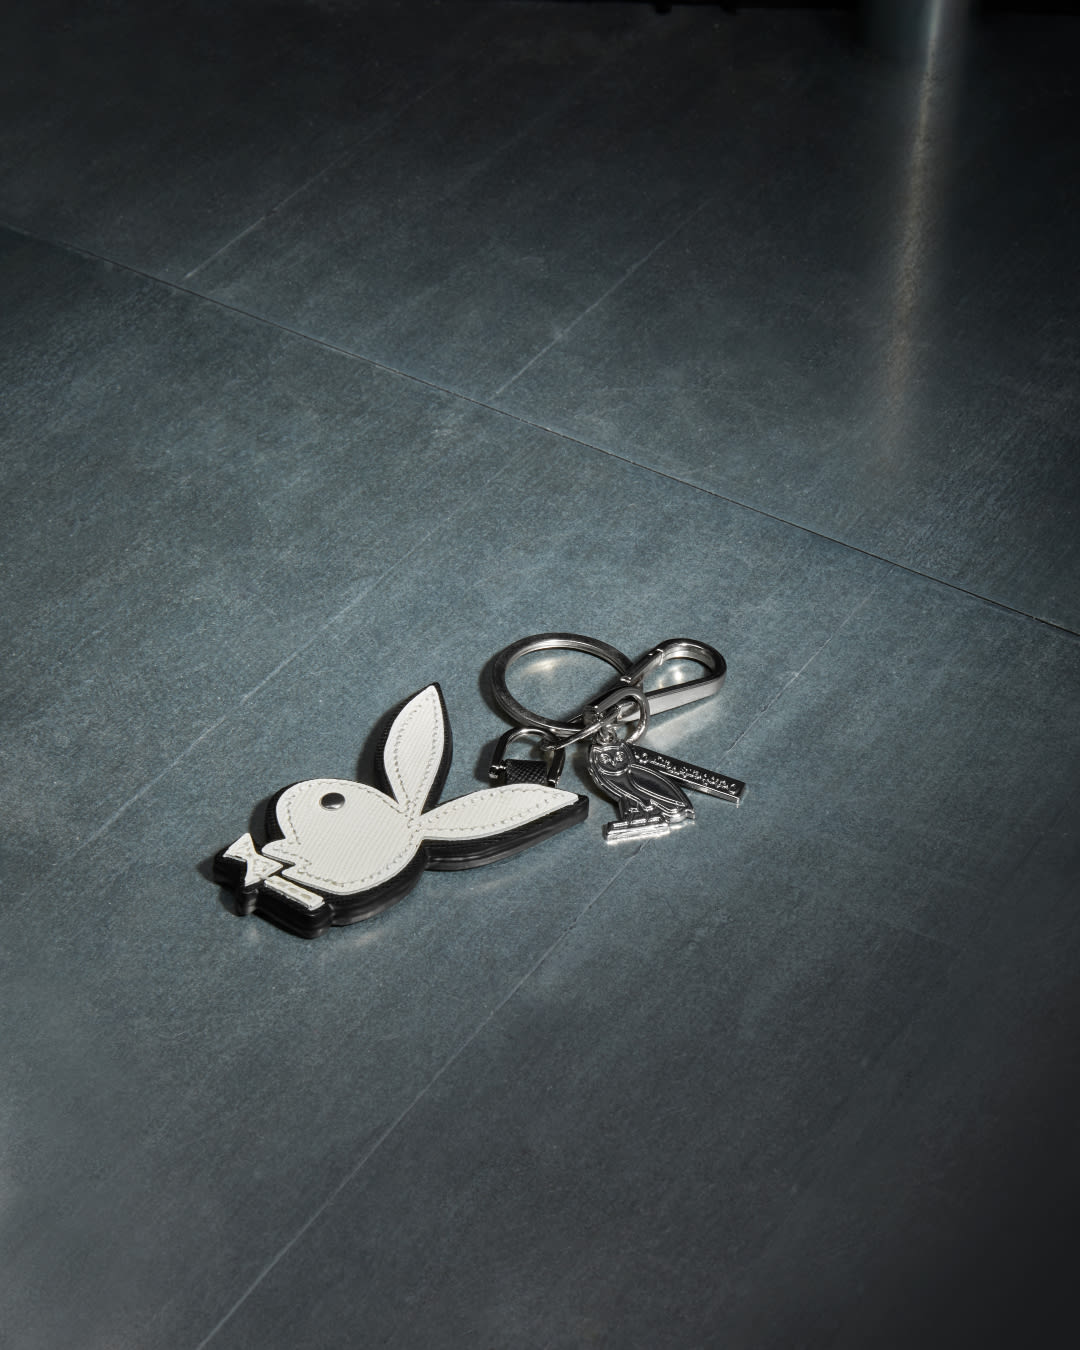 A keychain of the Playboy bunny logo.